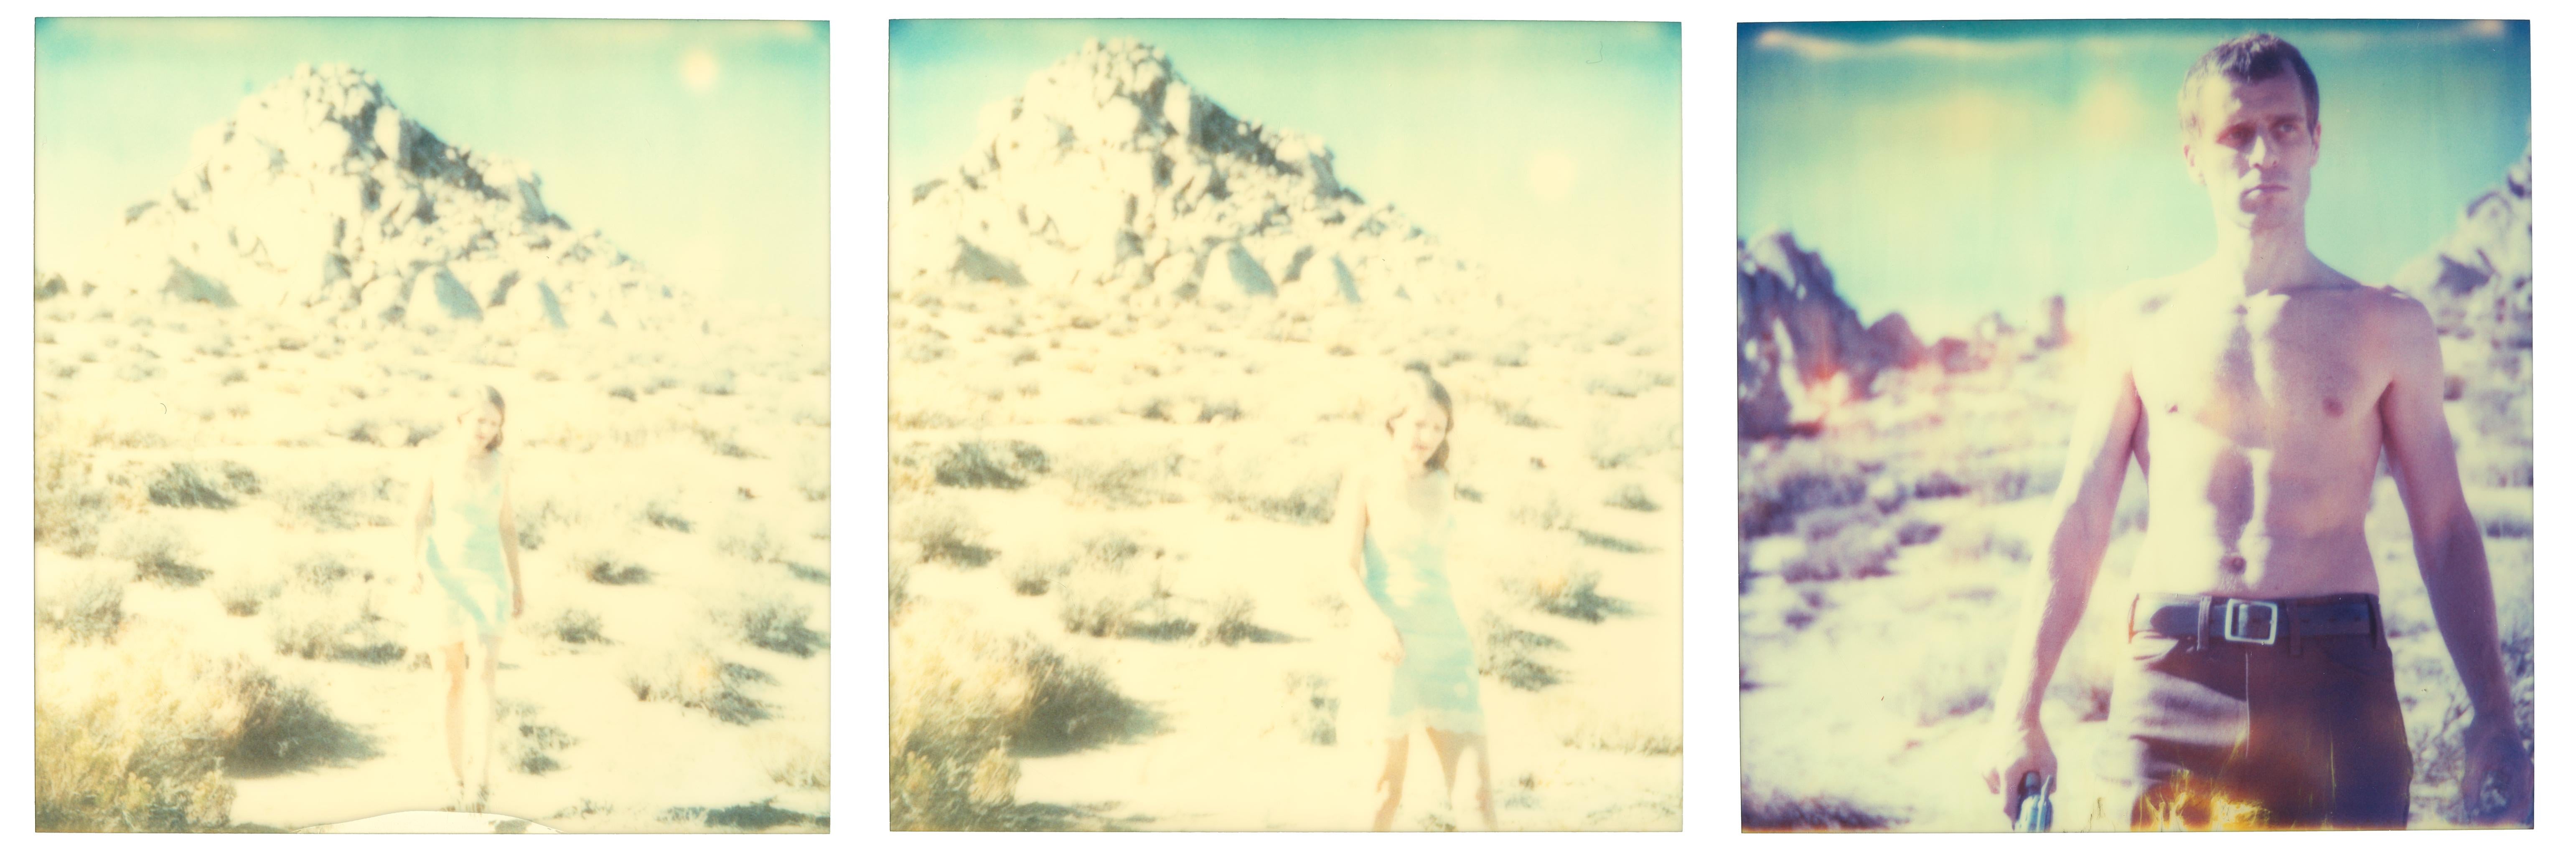 Stefanie Schneider Figurative Photograph - Aimless (Wastelands), triptych, analog - Polaroid, 21st Century, Color